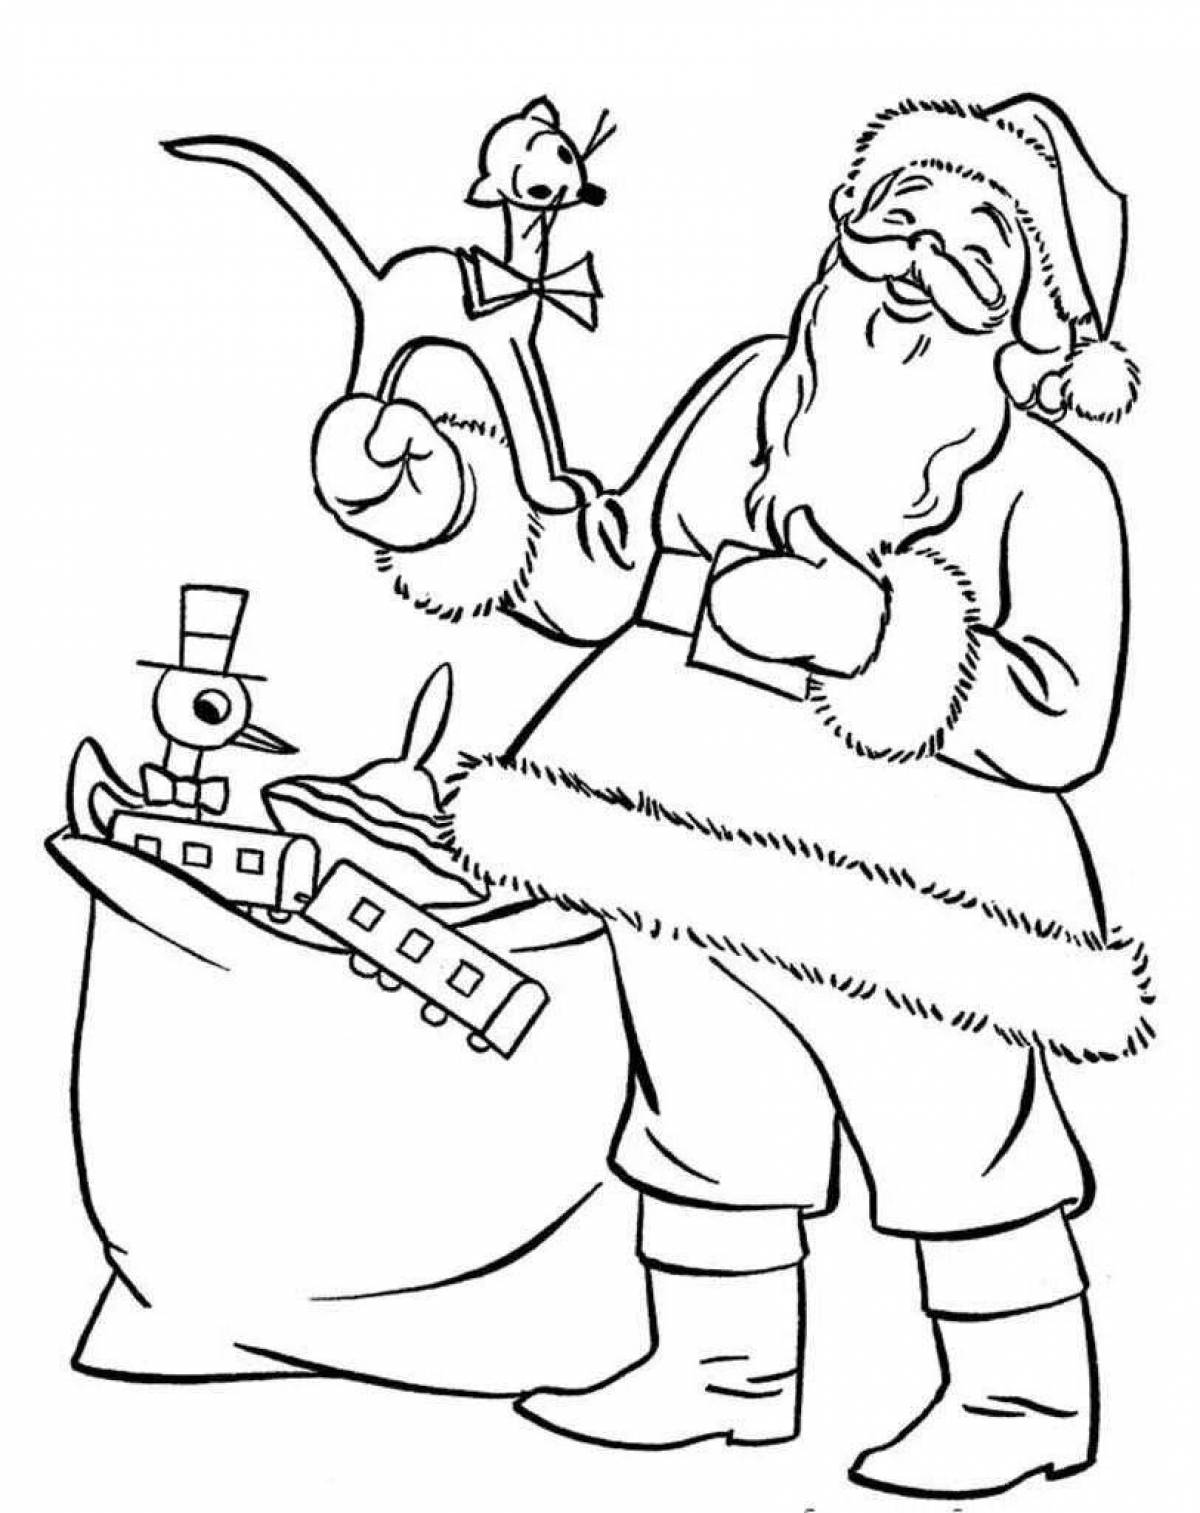 Coloring page festive santa claus